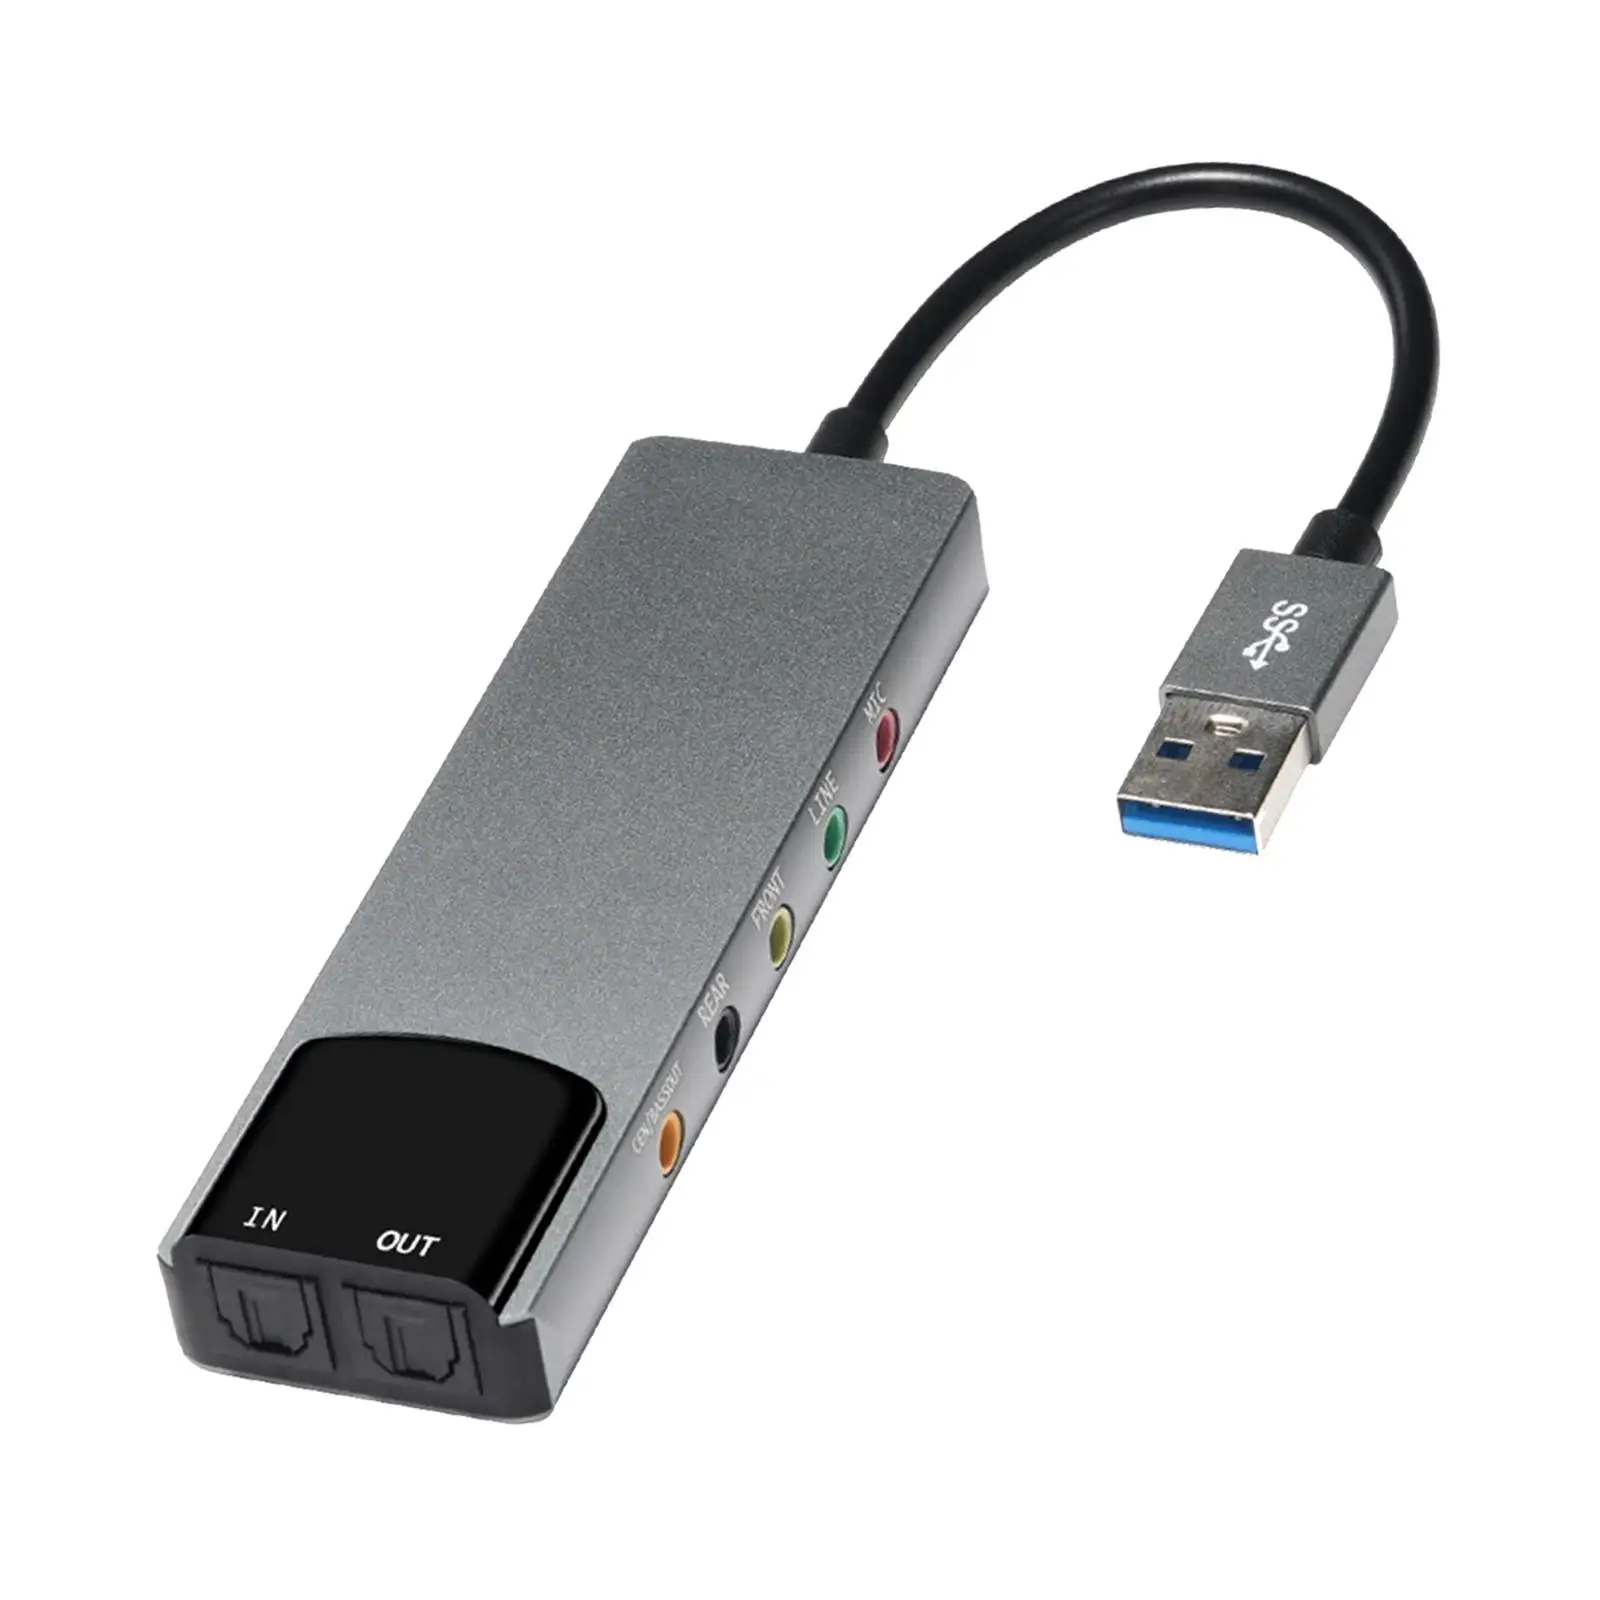 USB Sound Card Adapter Premium External Audio Converter Stereo Sound Card Converter External Audio Adapter for Laptops Desktops